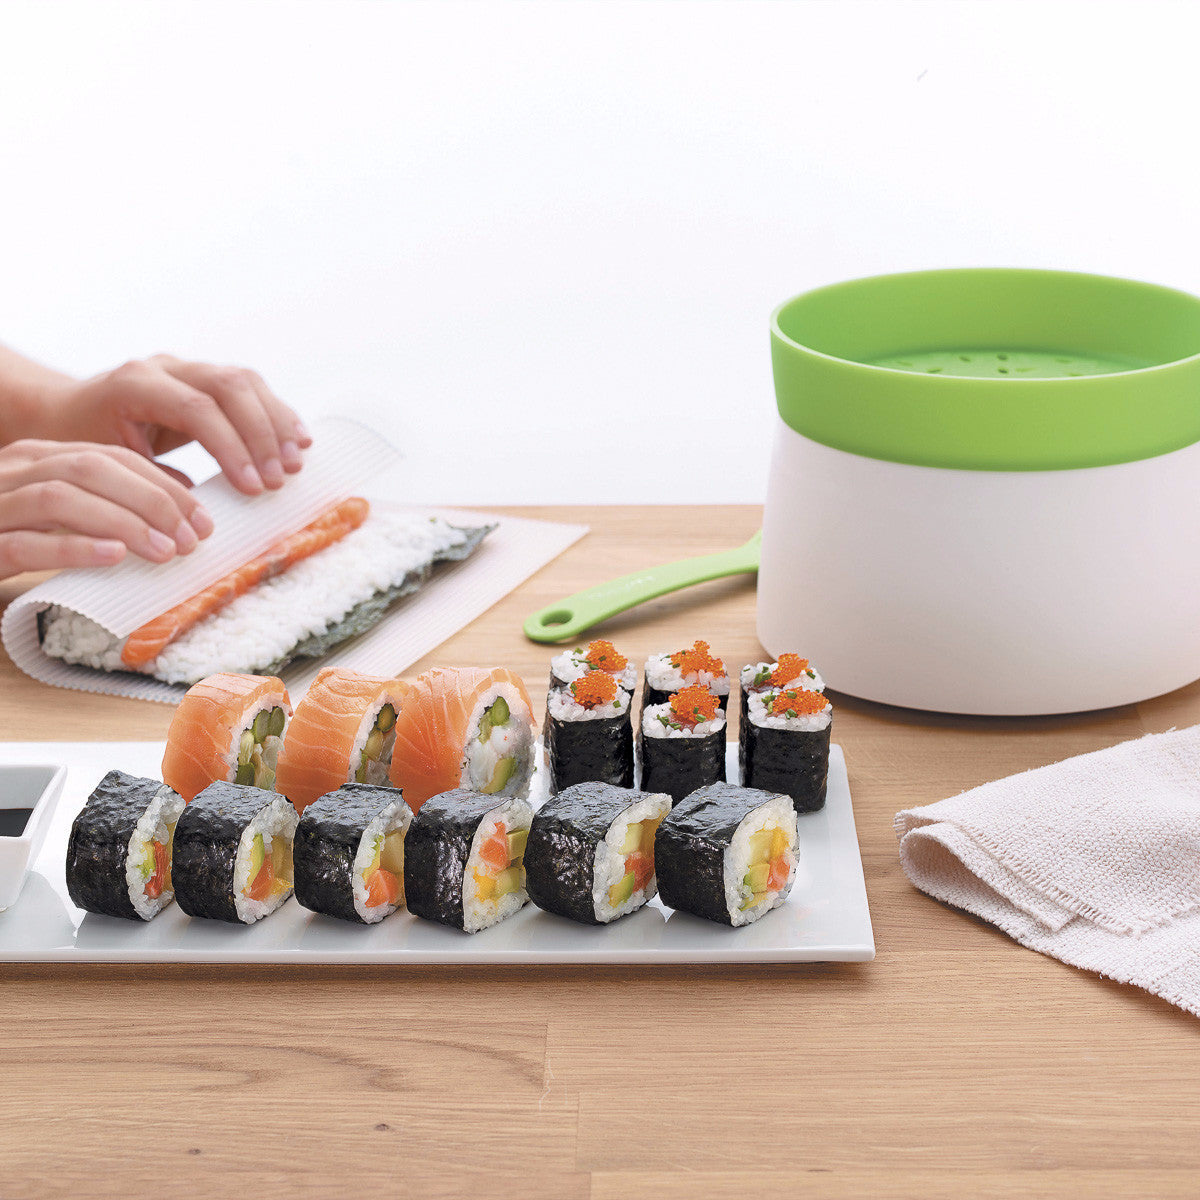 Lekue Sushi Making Kit Includes Rice Cooker Paddle Makisu/Roller Recipes